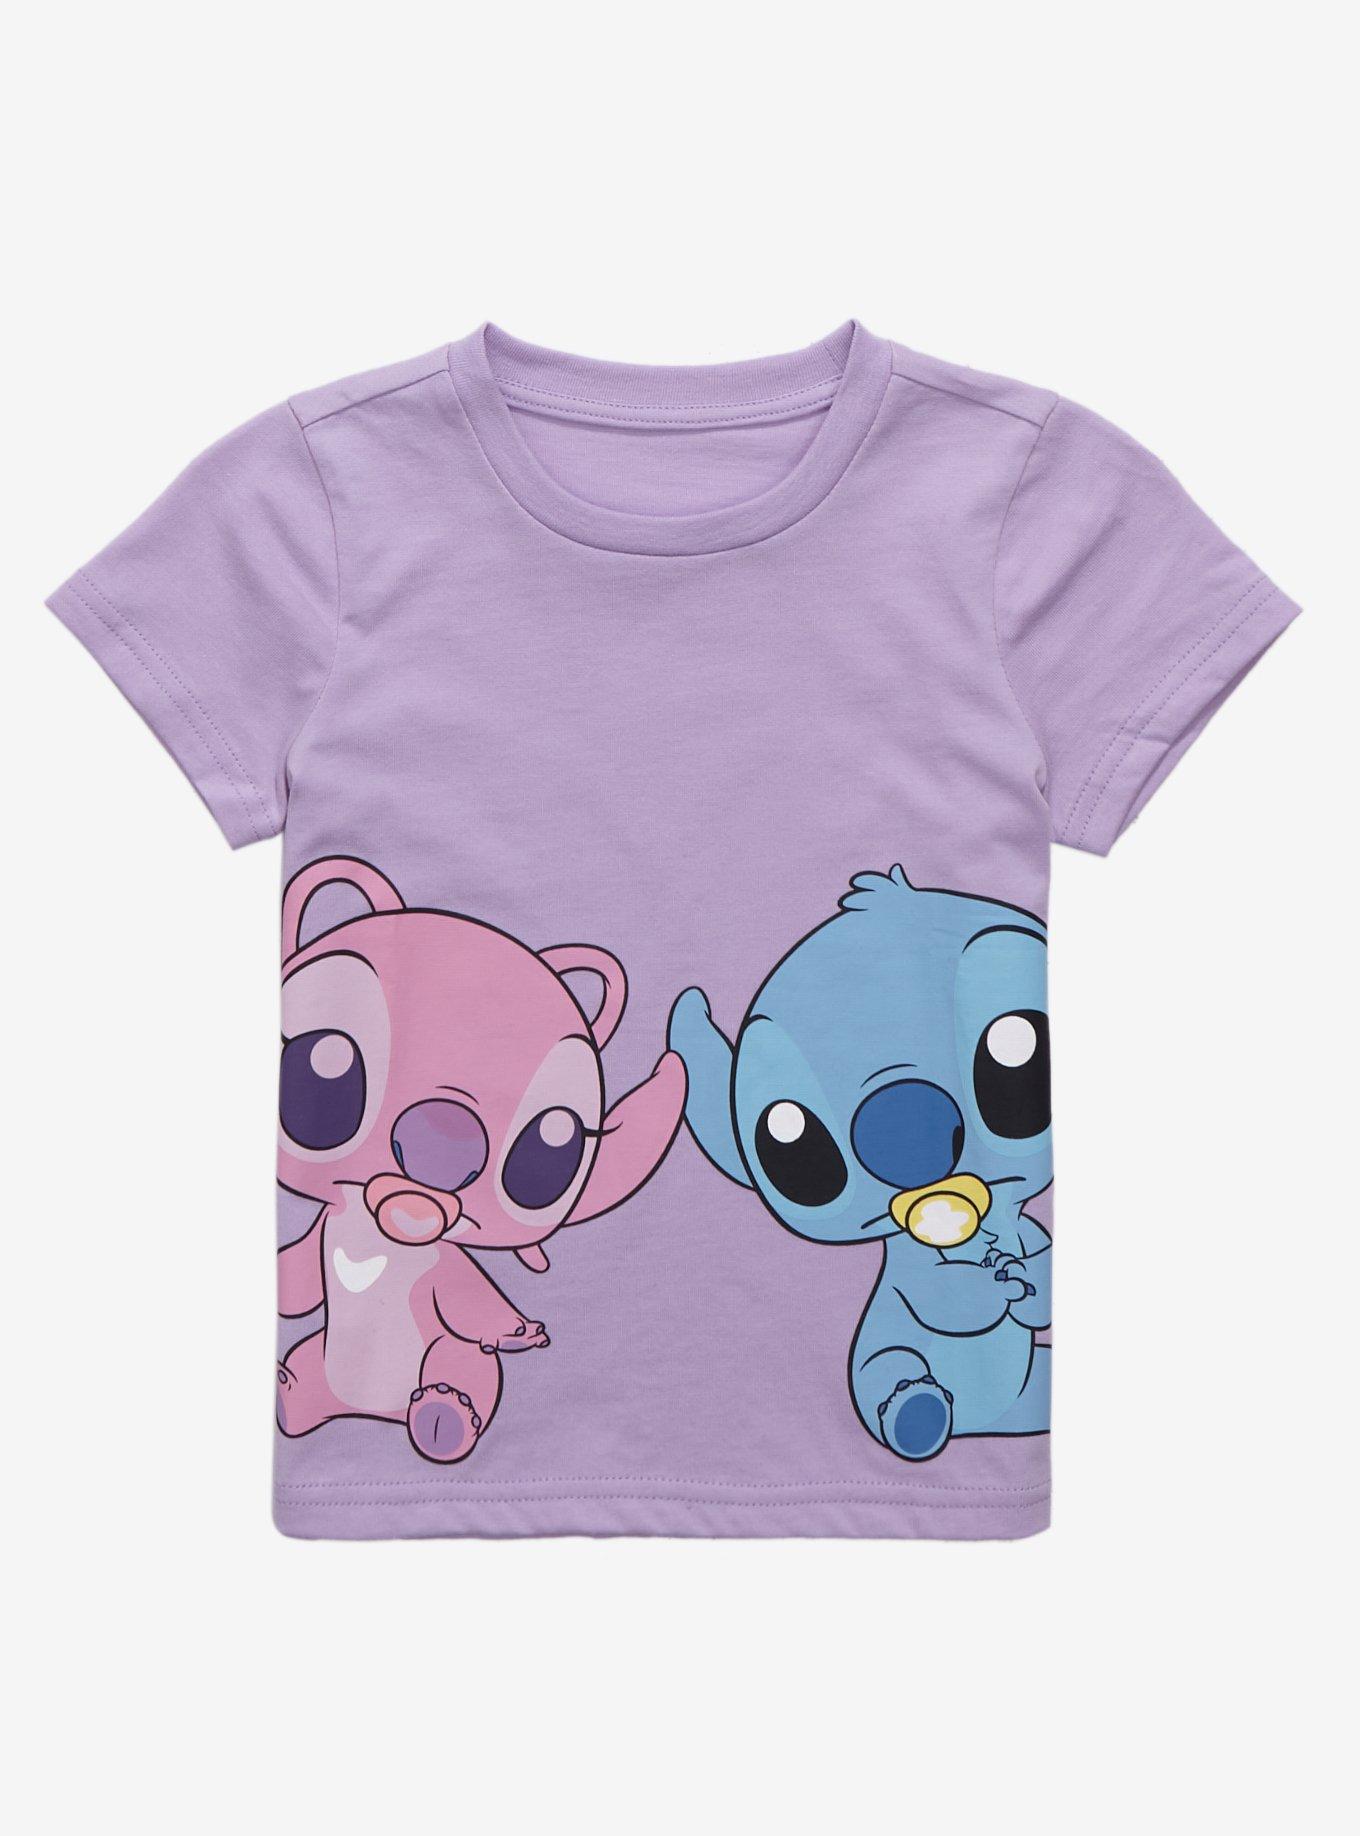 Angel Stitch In Love !! Essential T-Shirt by Gaming-Fashion